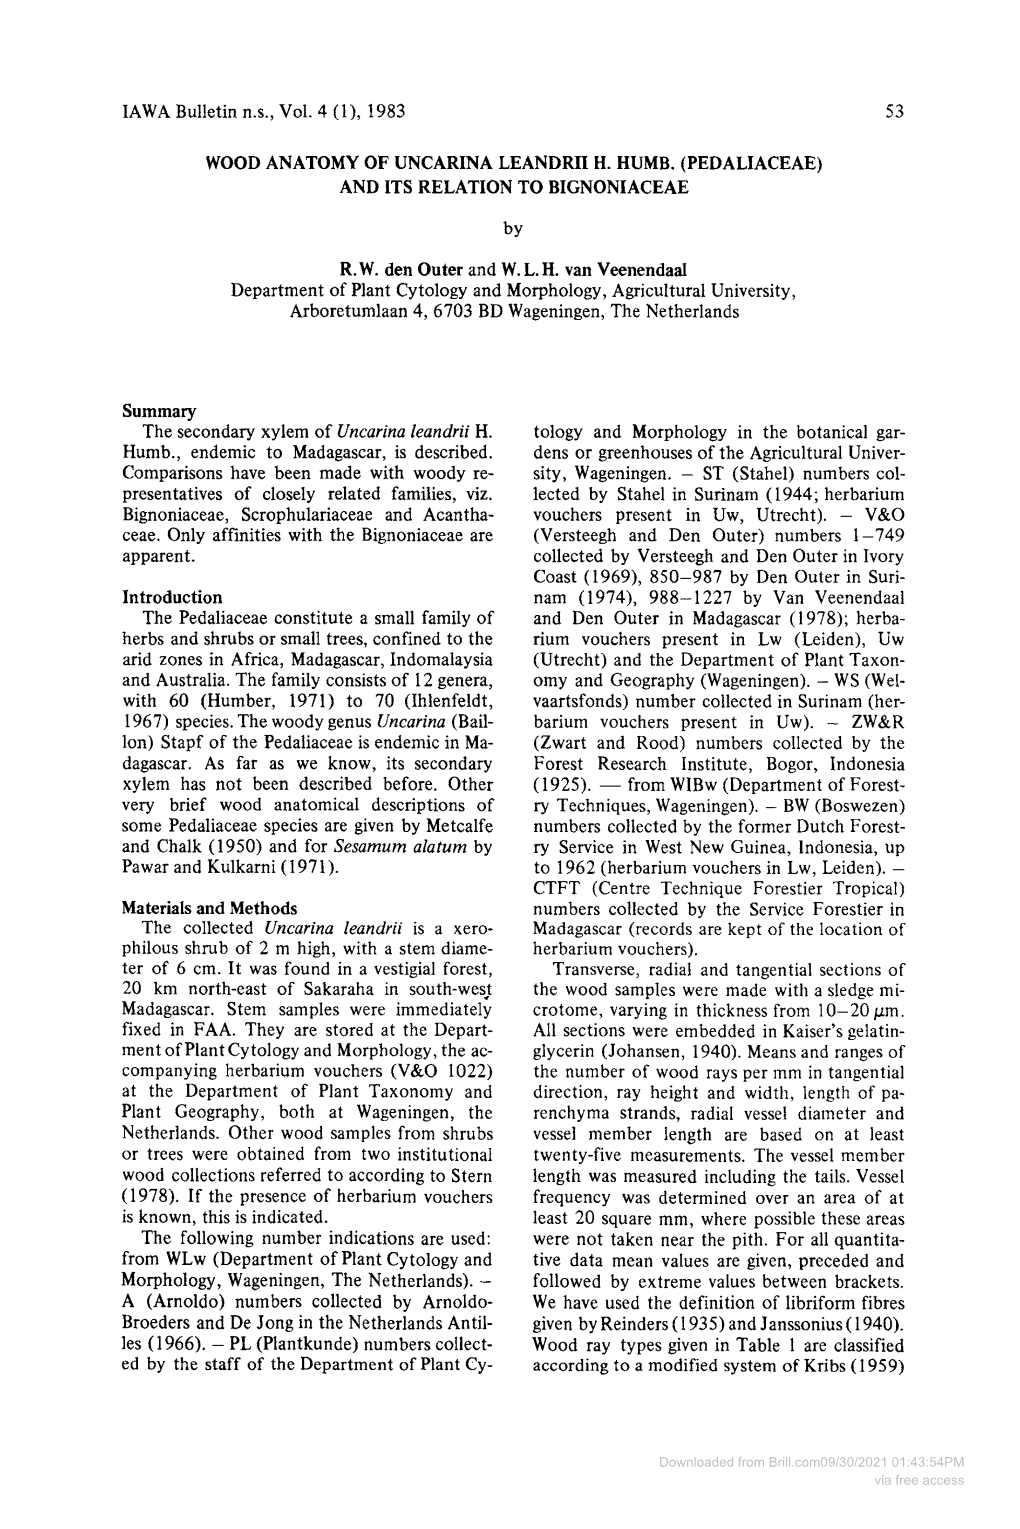 Wood Anatomy of Uncarina Leandrii H. Humb.(Pedaliaceae) and Its